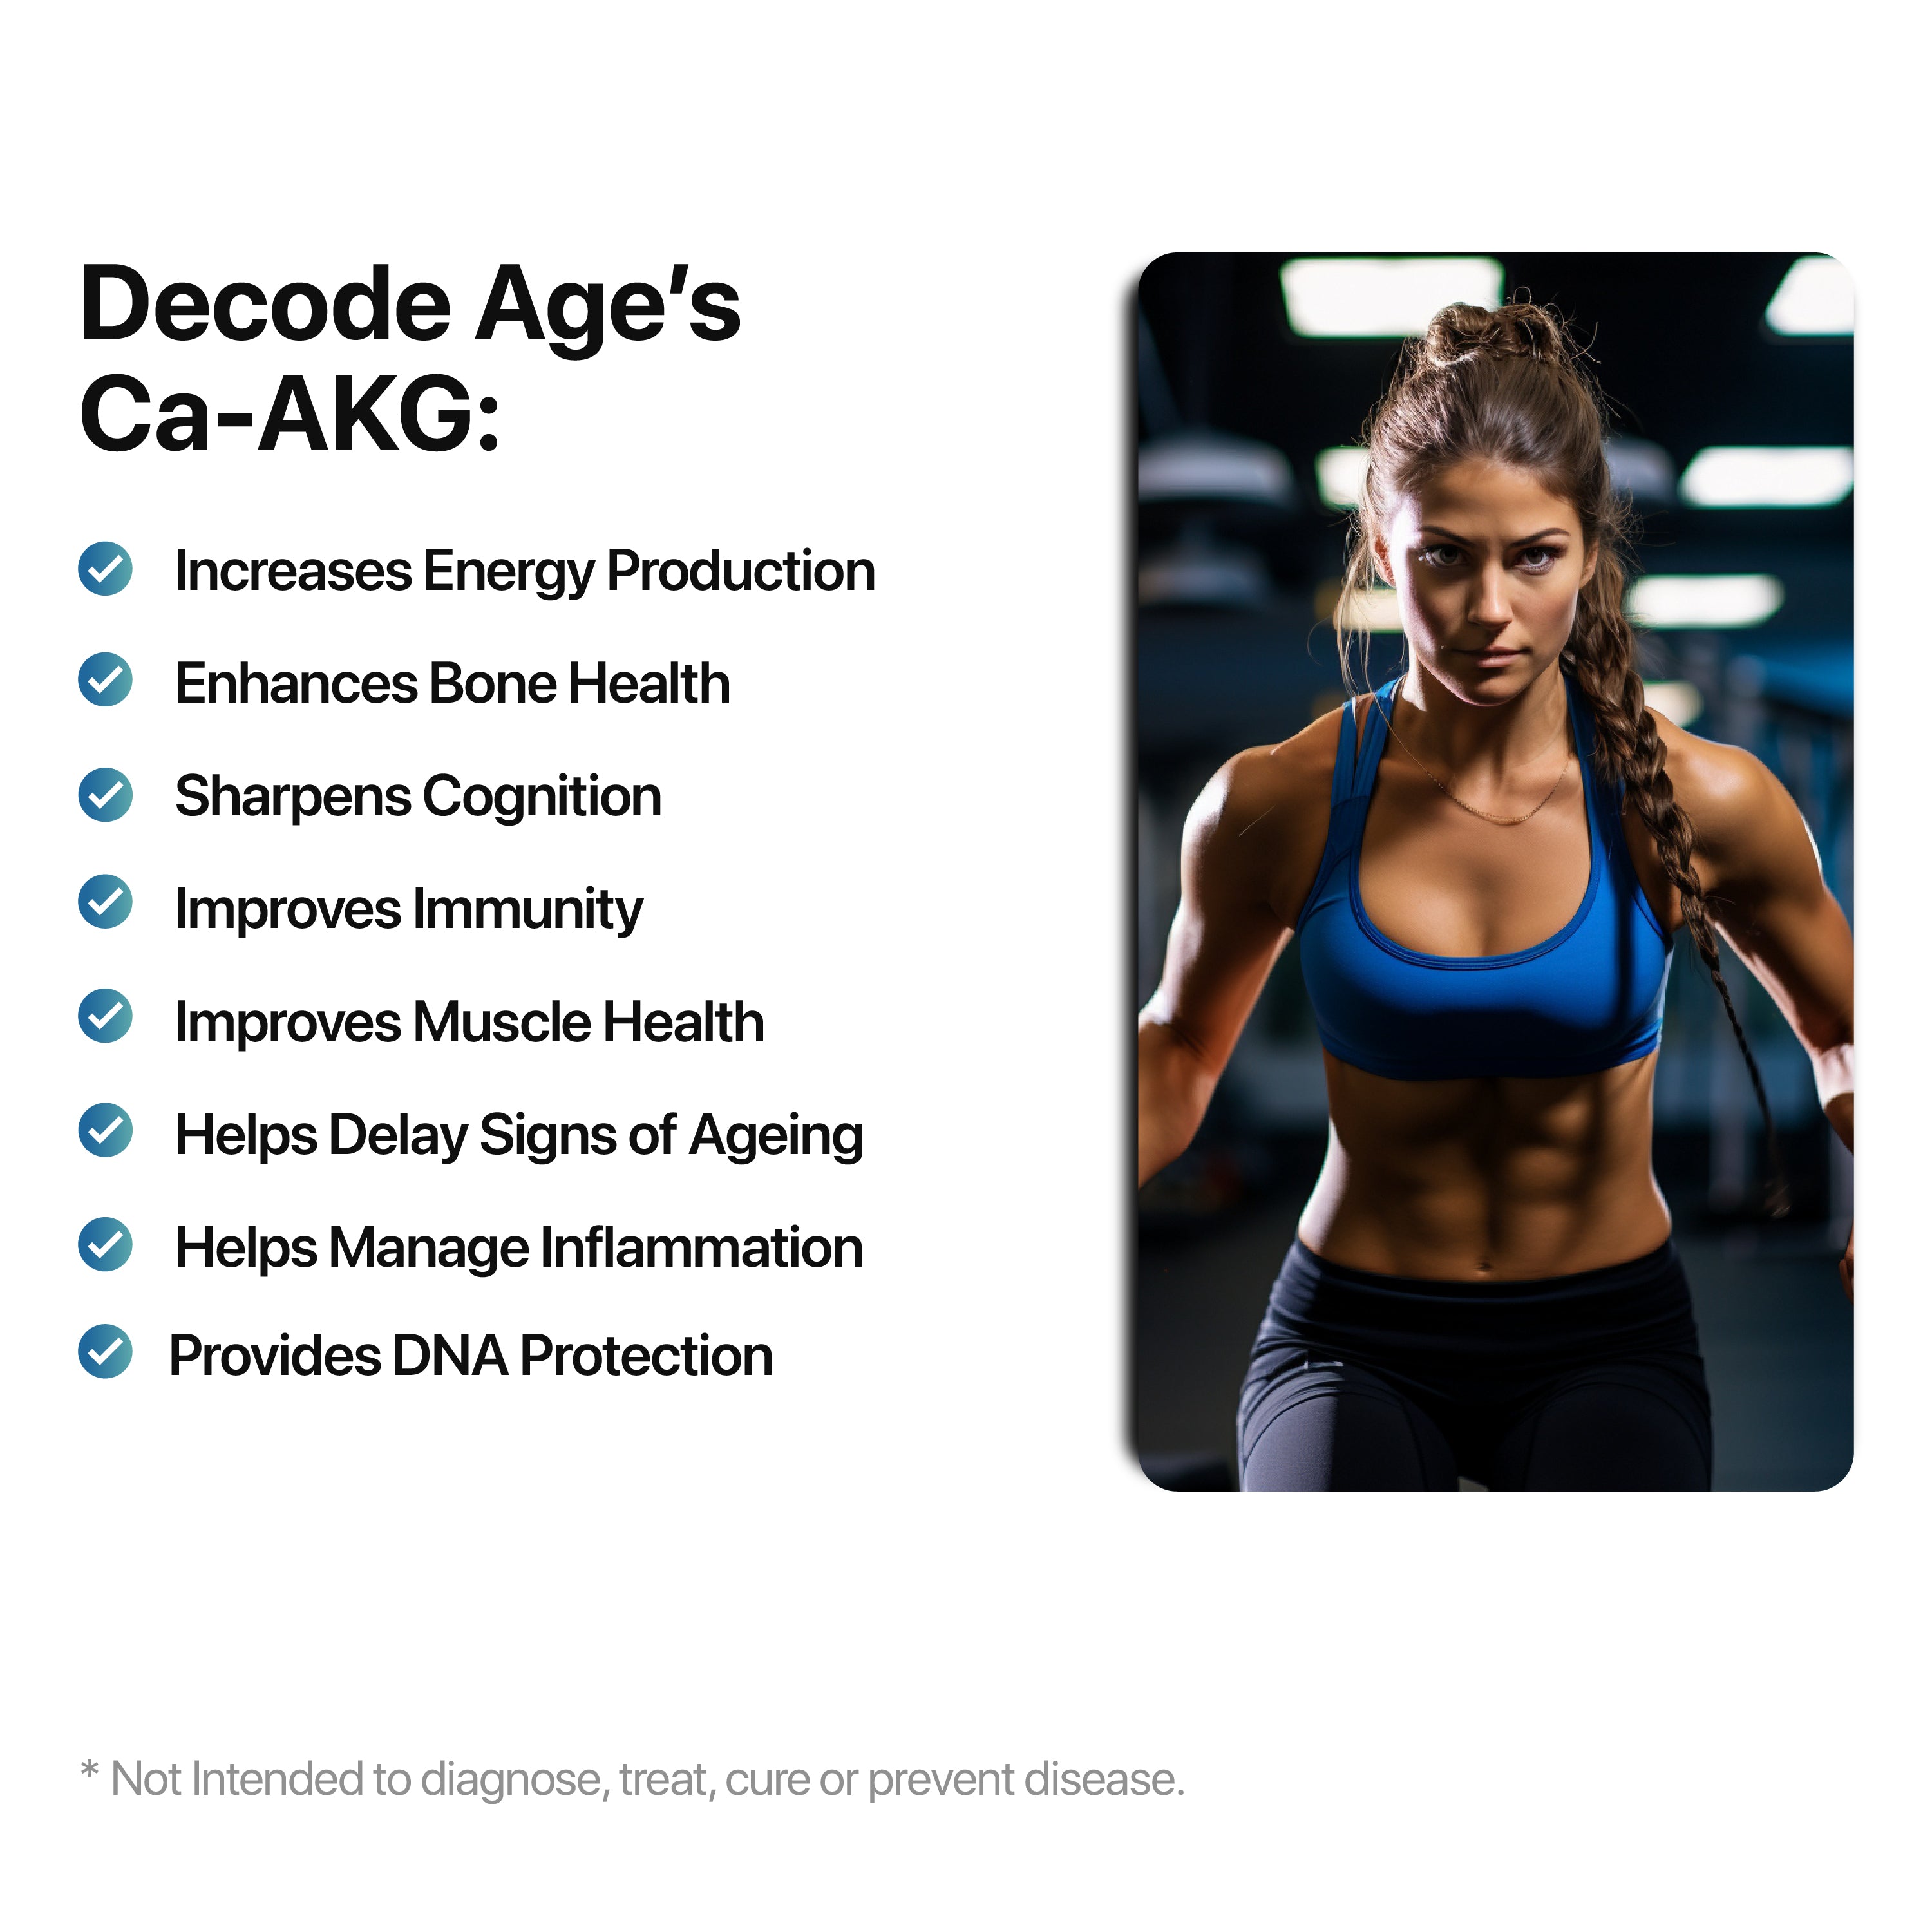 Ca-AKG (Calcium Alpha-Ketoglutarate) | Boost Energy & Mental Sharpness, Enhance Bone & Muscle Health | 30 Capsules